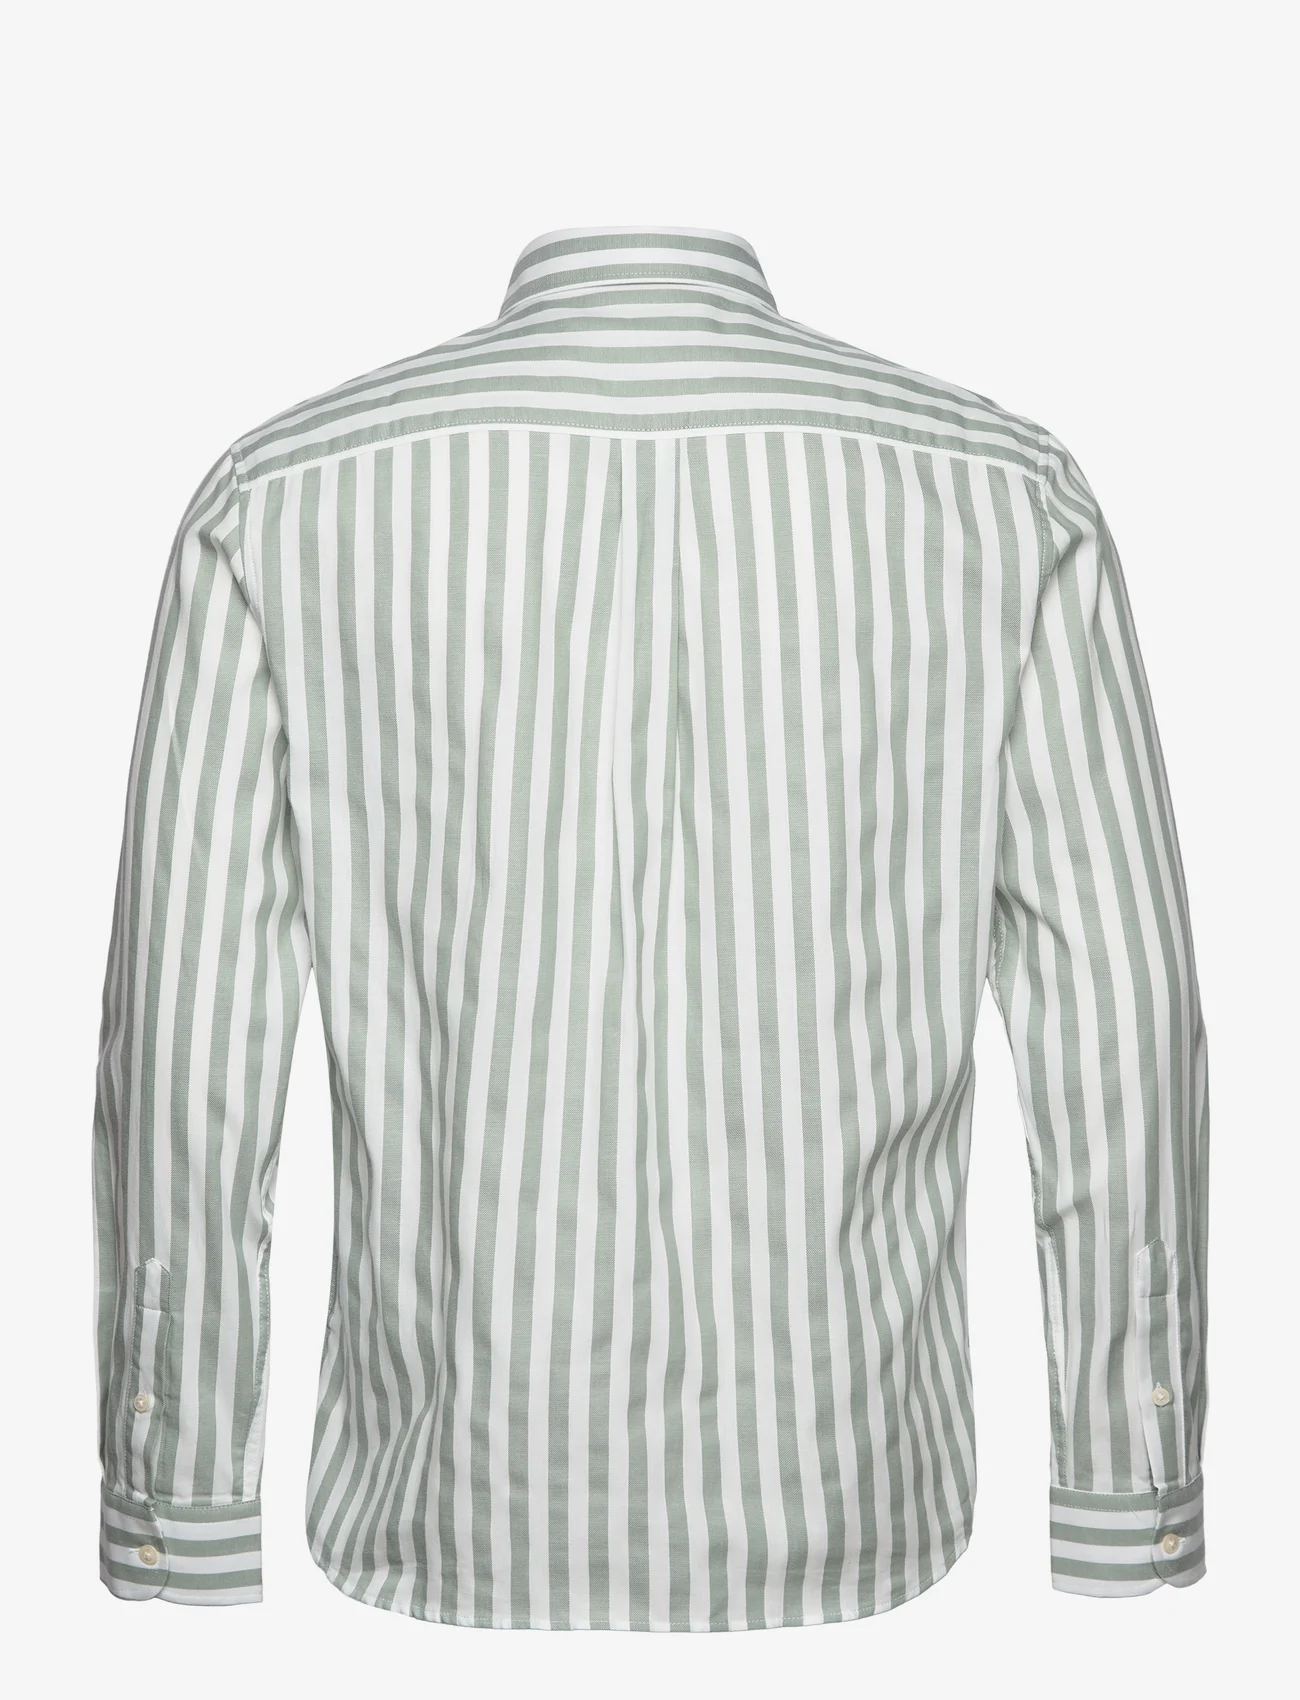 Lexington Clothing - Fred Striped Shirt - casual overhemden - green/white stripe - 1